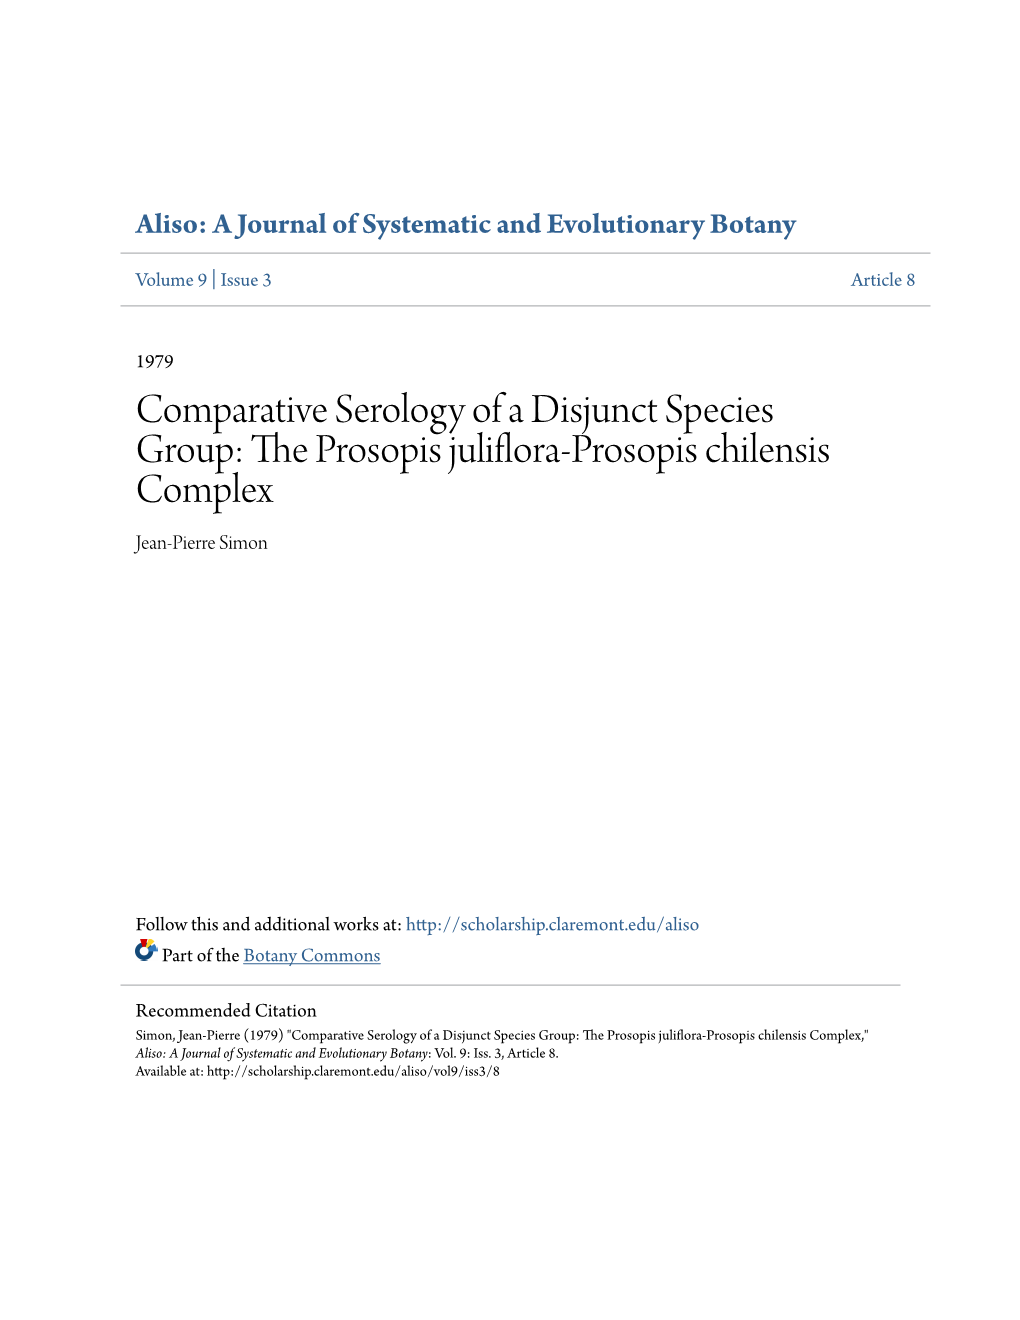 Comparative Serology of a Disjunct Species Group: the Prosopis Jvliflora-Prosopis Chilensis Complex